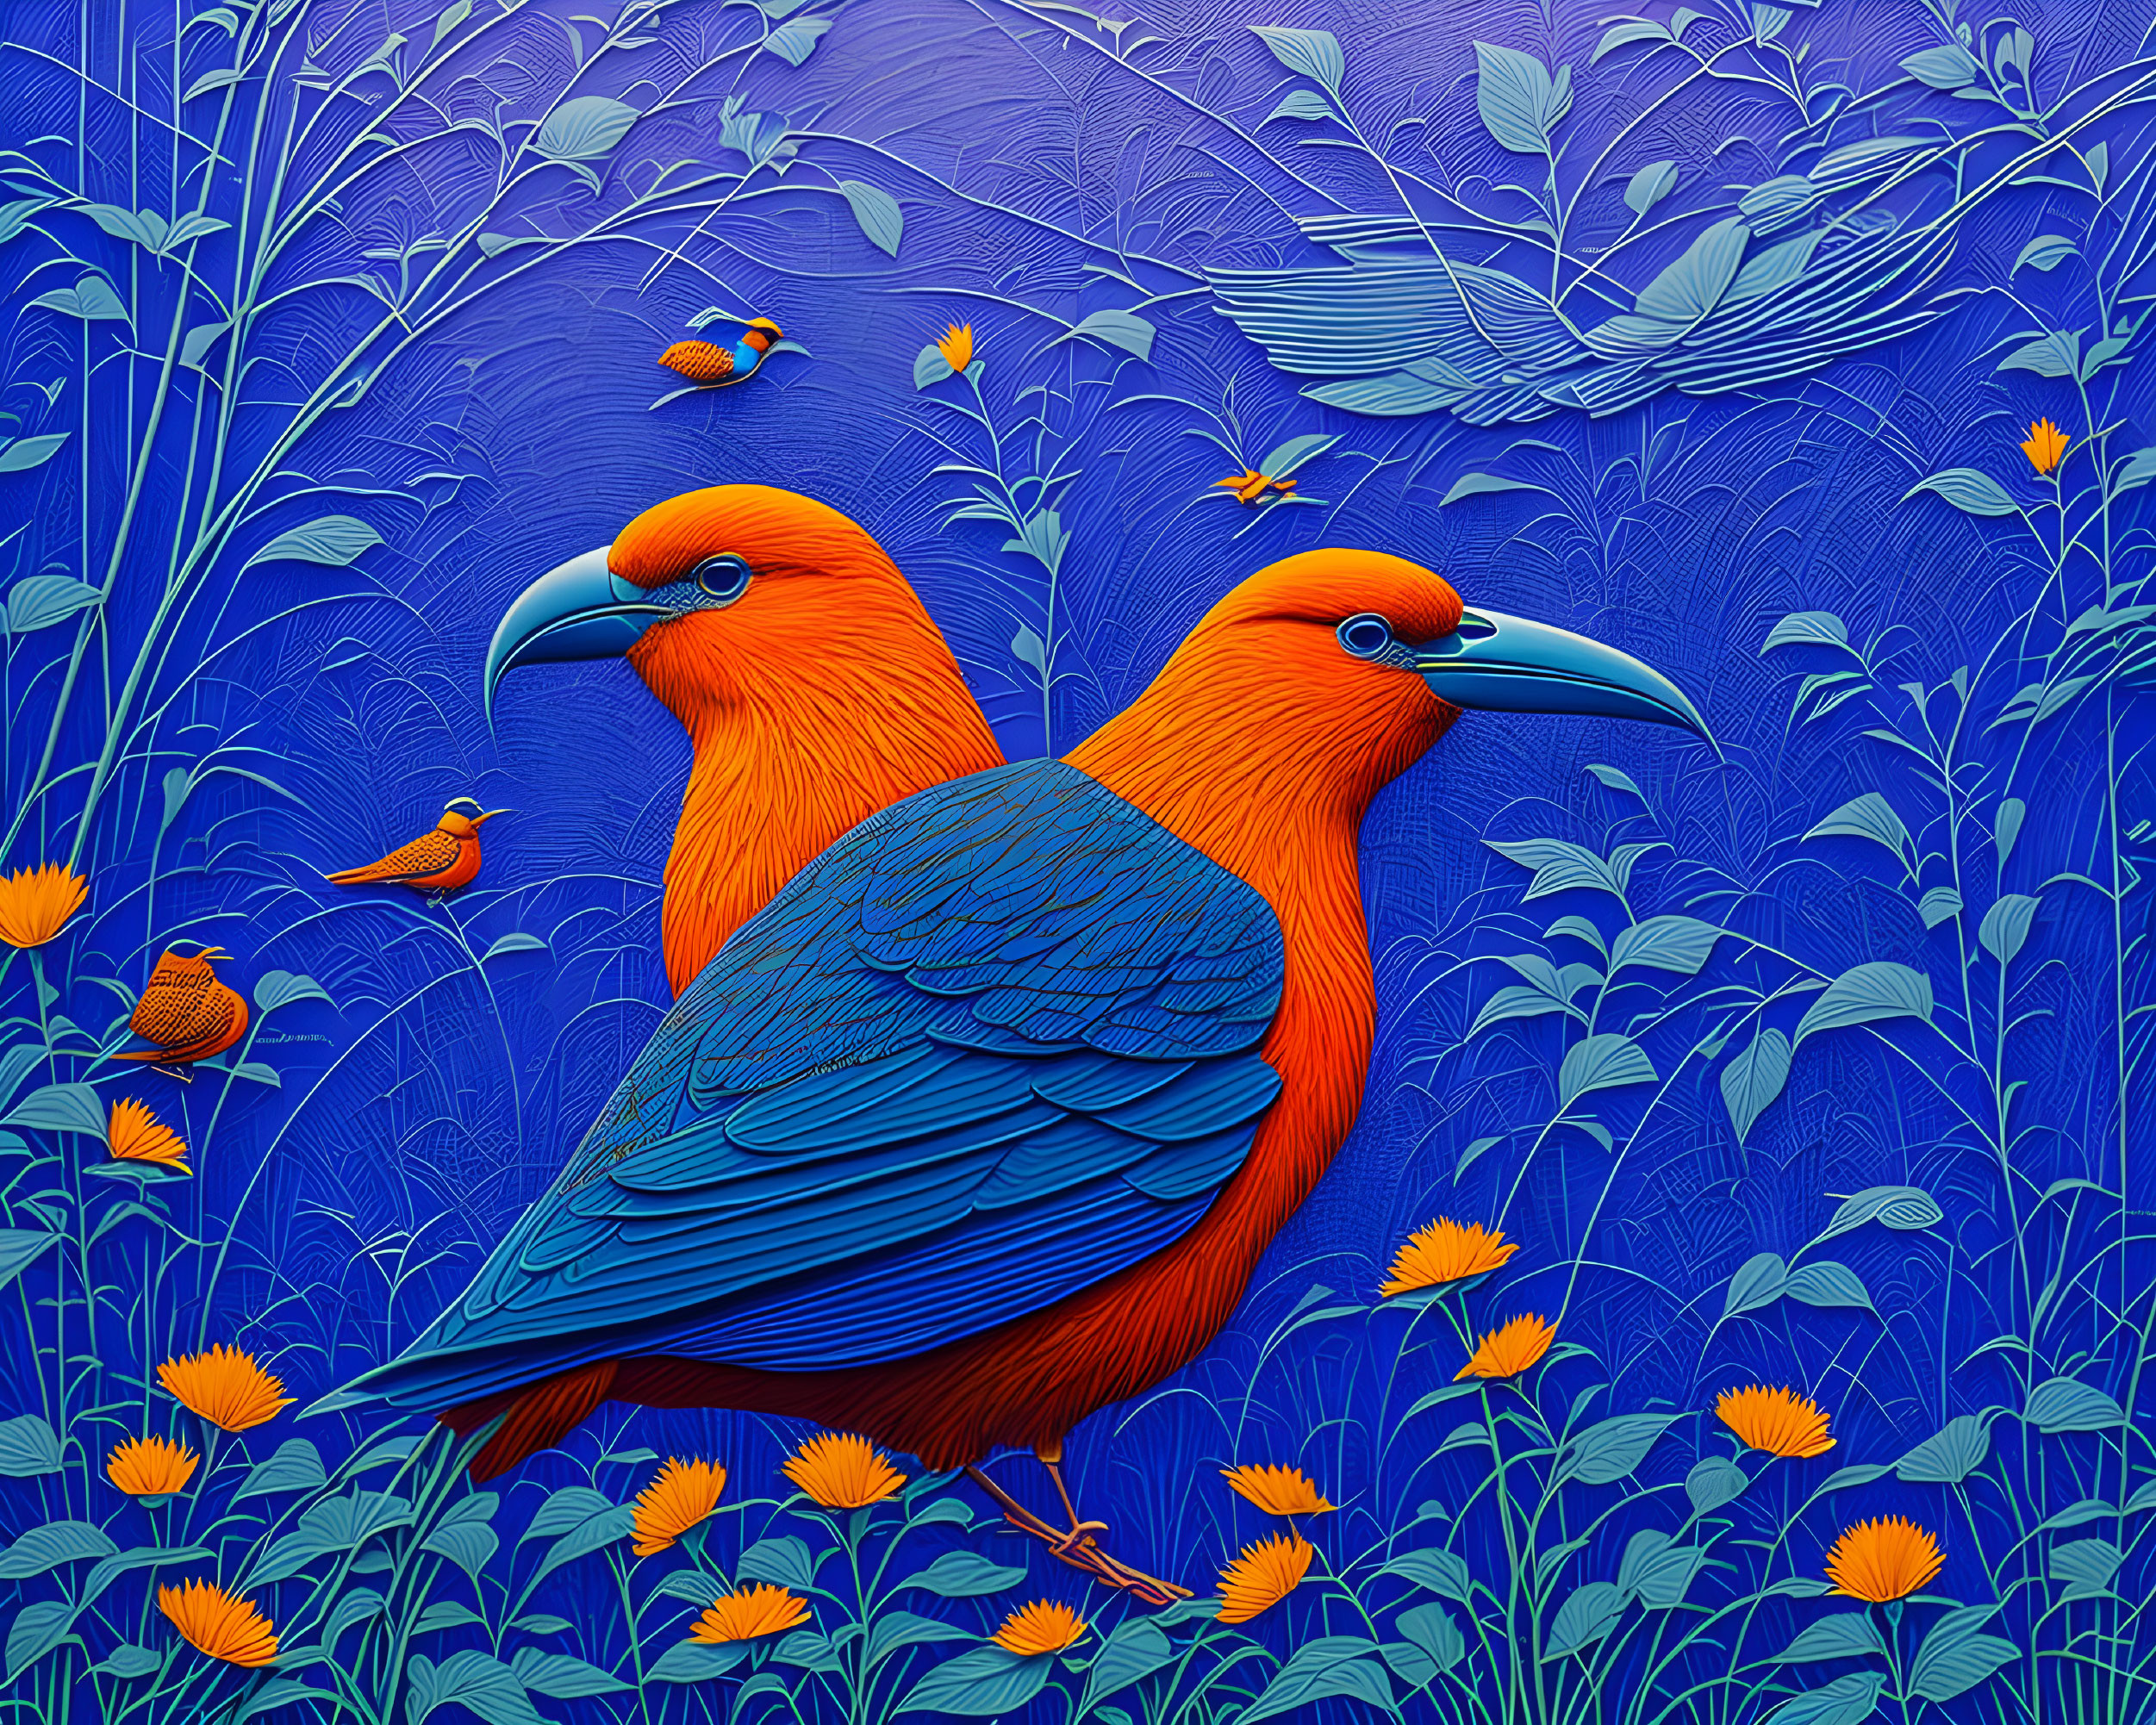 Vibrant Birds in Blue Garden